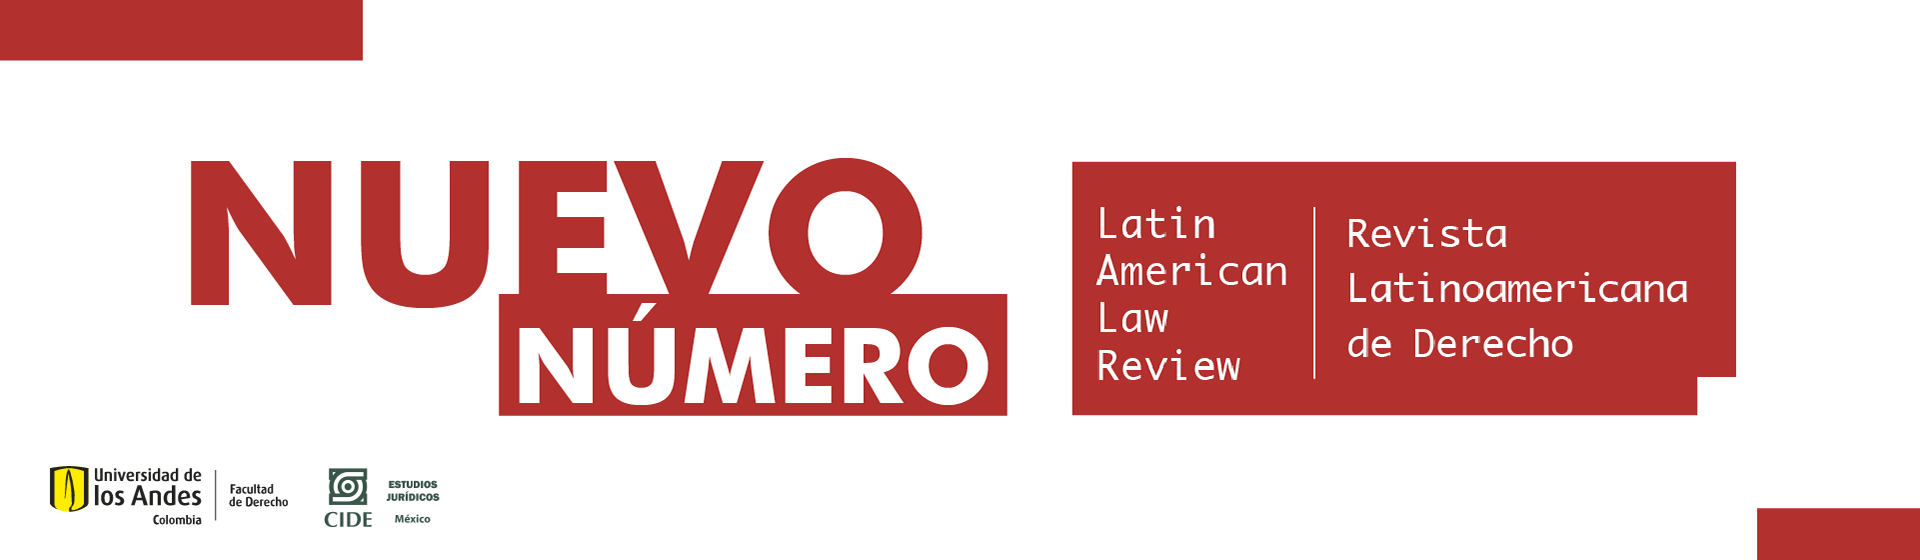 Latin American Law Review nuevo número